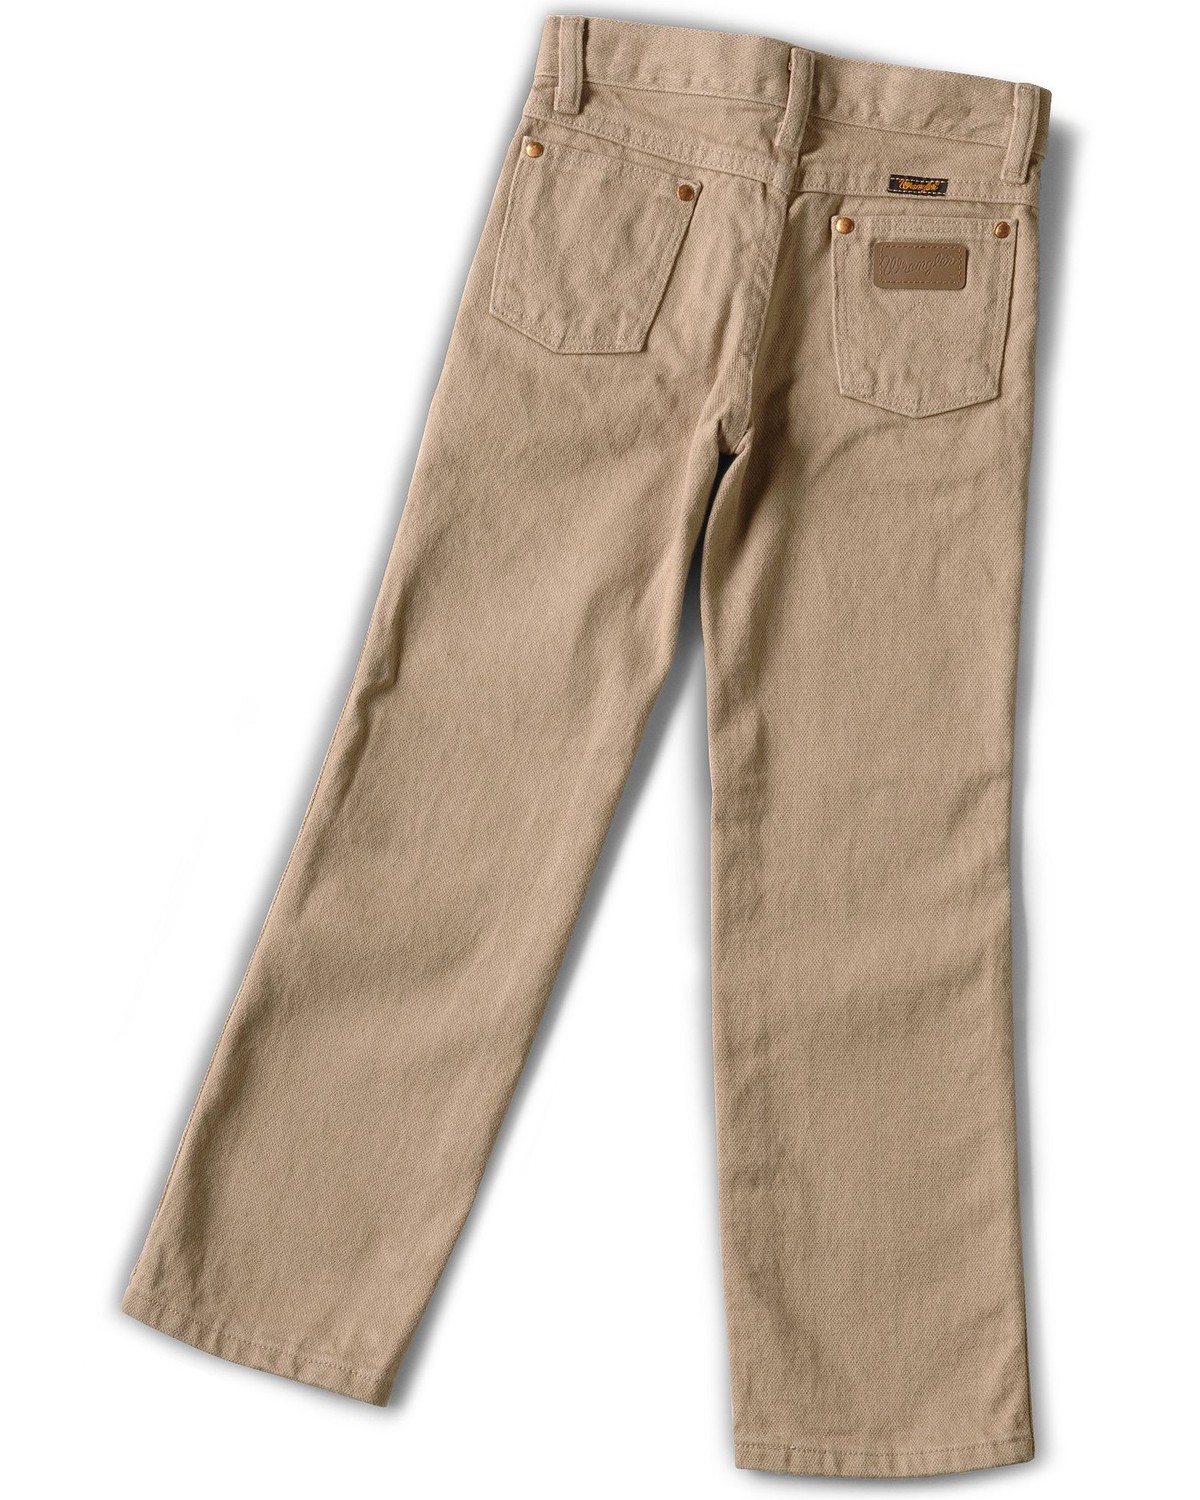 Khaki Wrangler Cowboy Cut Jeans Slovakia, SAVE 50% 